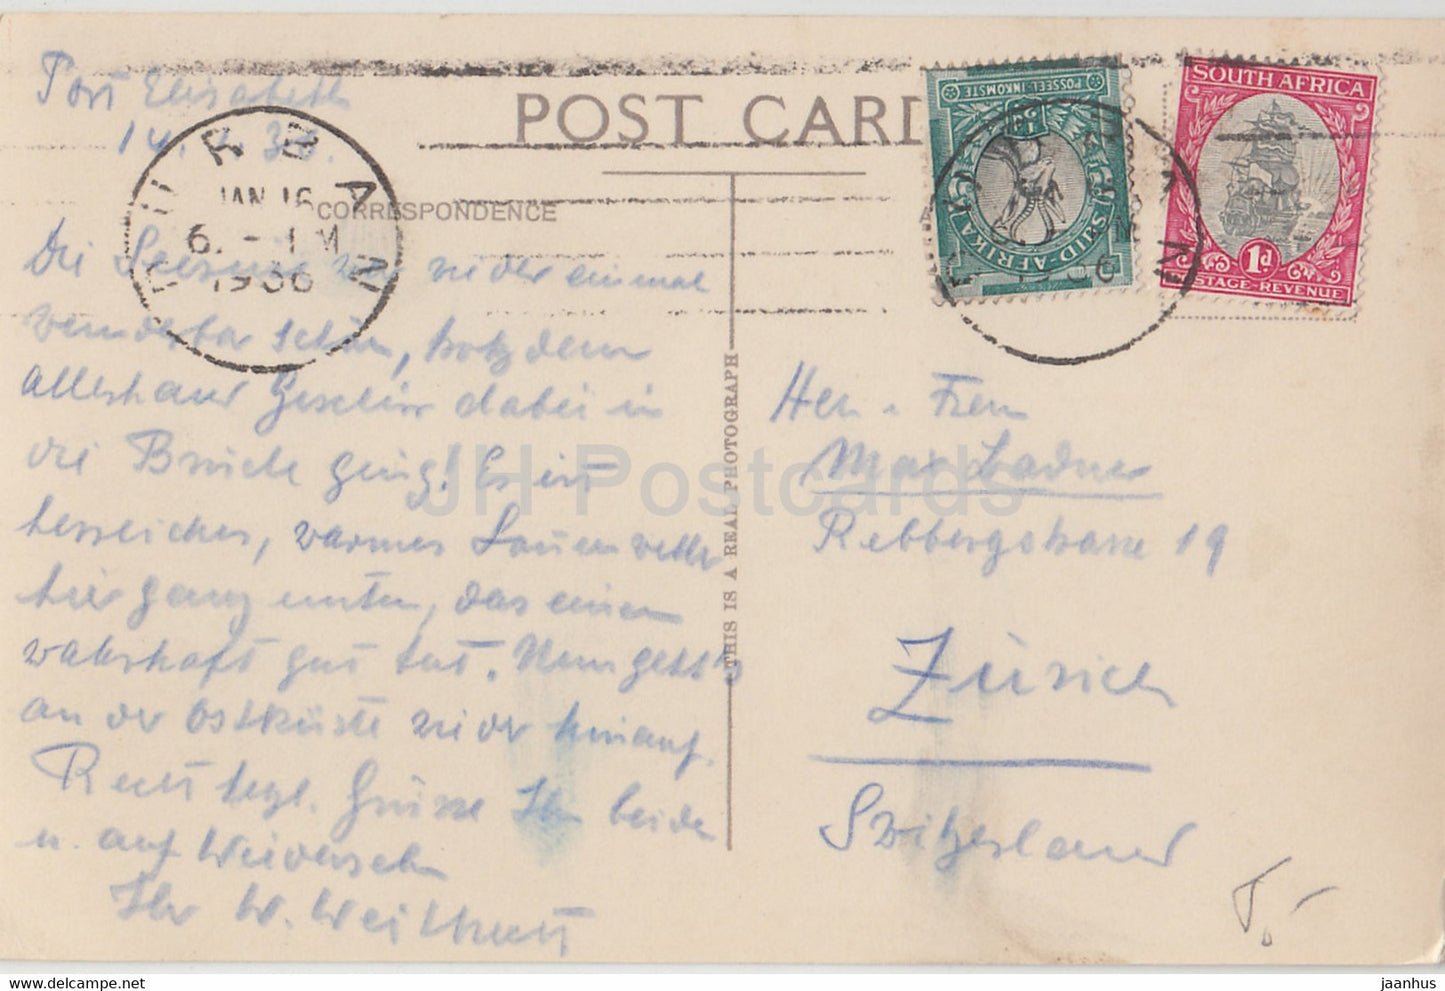 Port Elizabeth – The Union's Snake Park – alte Postkarte – 1936 – Südafrika – gebraucht